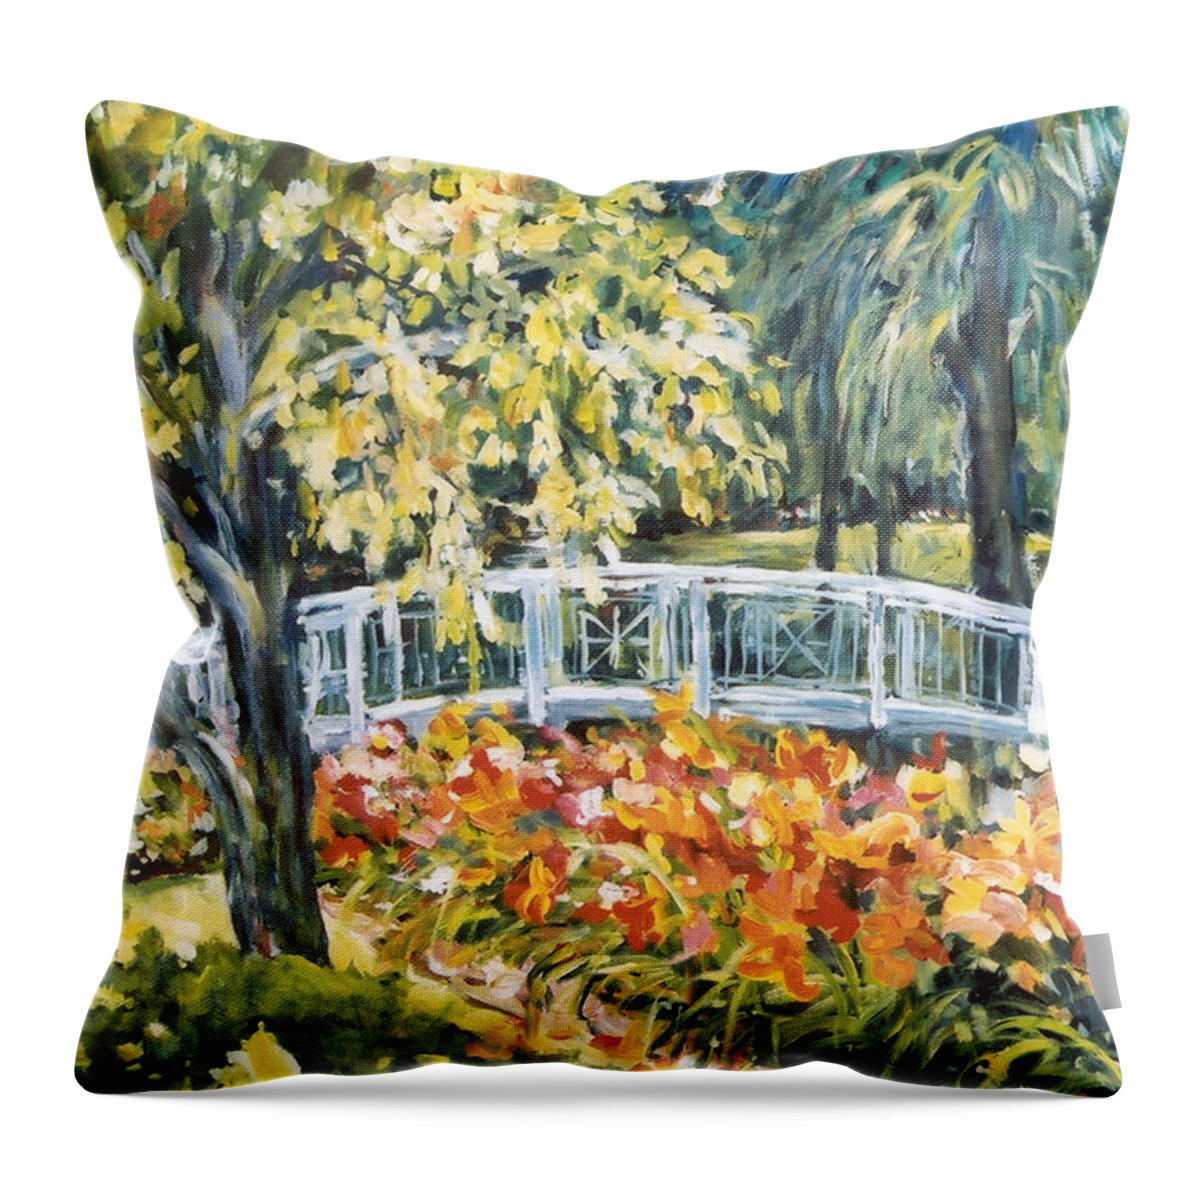 Ingrid Dohm Throw Pillow featuring the painting La Paloma Foot Bridge by Ingrid Dohm